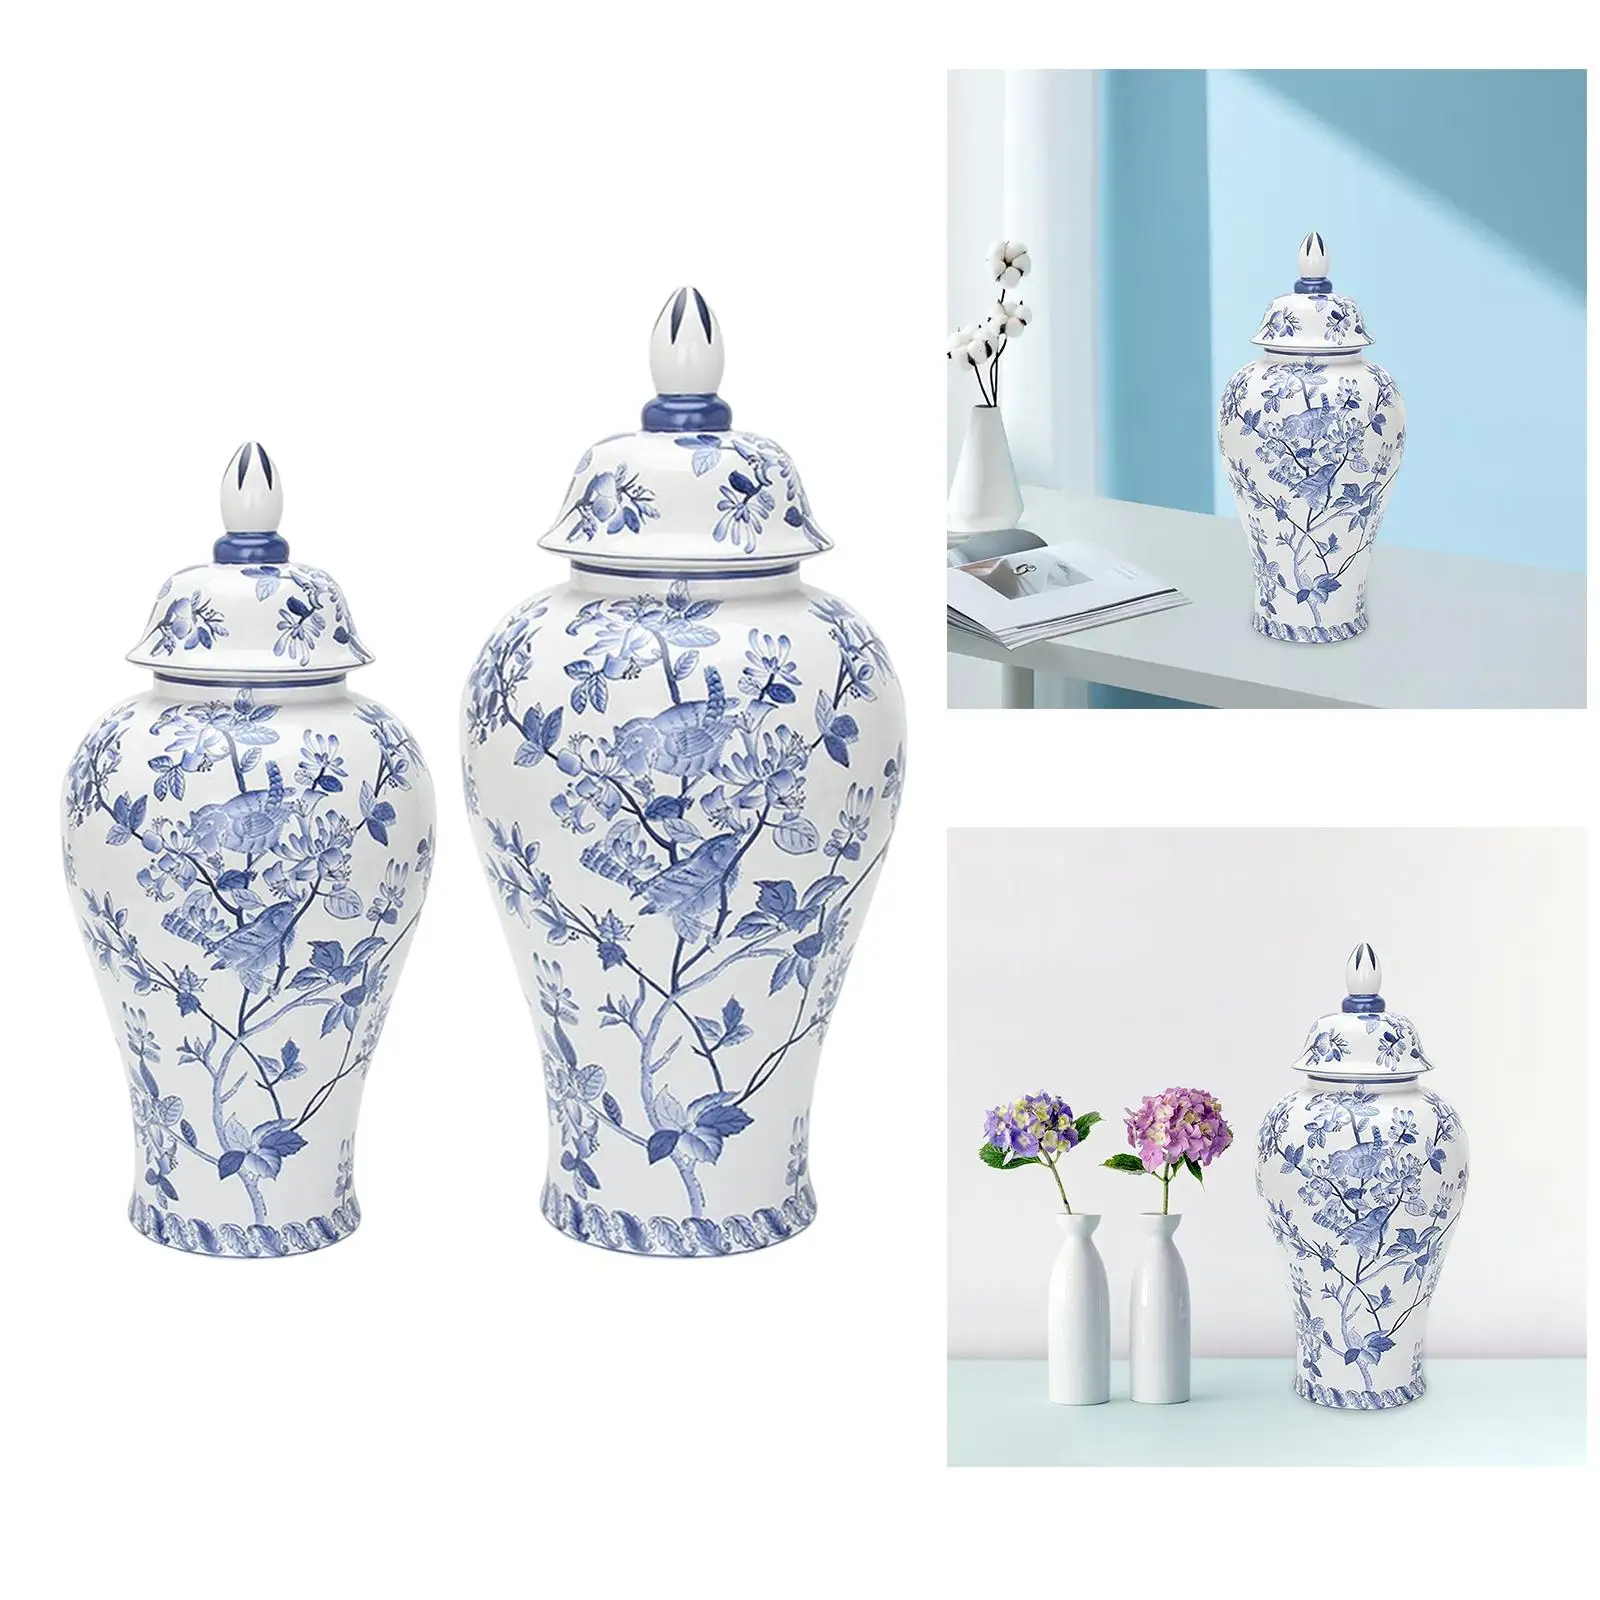 Ceramic Flower Vase Temple Storage Jar Handicraft Table Centerpiece Decor Blue White Porcelain Ginger Jar for Collection Party